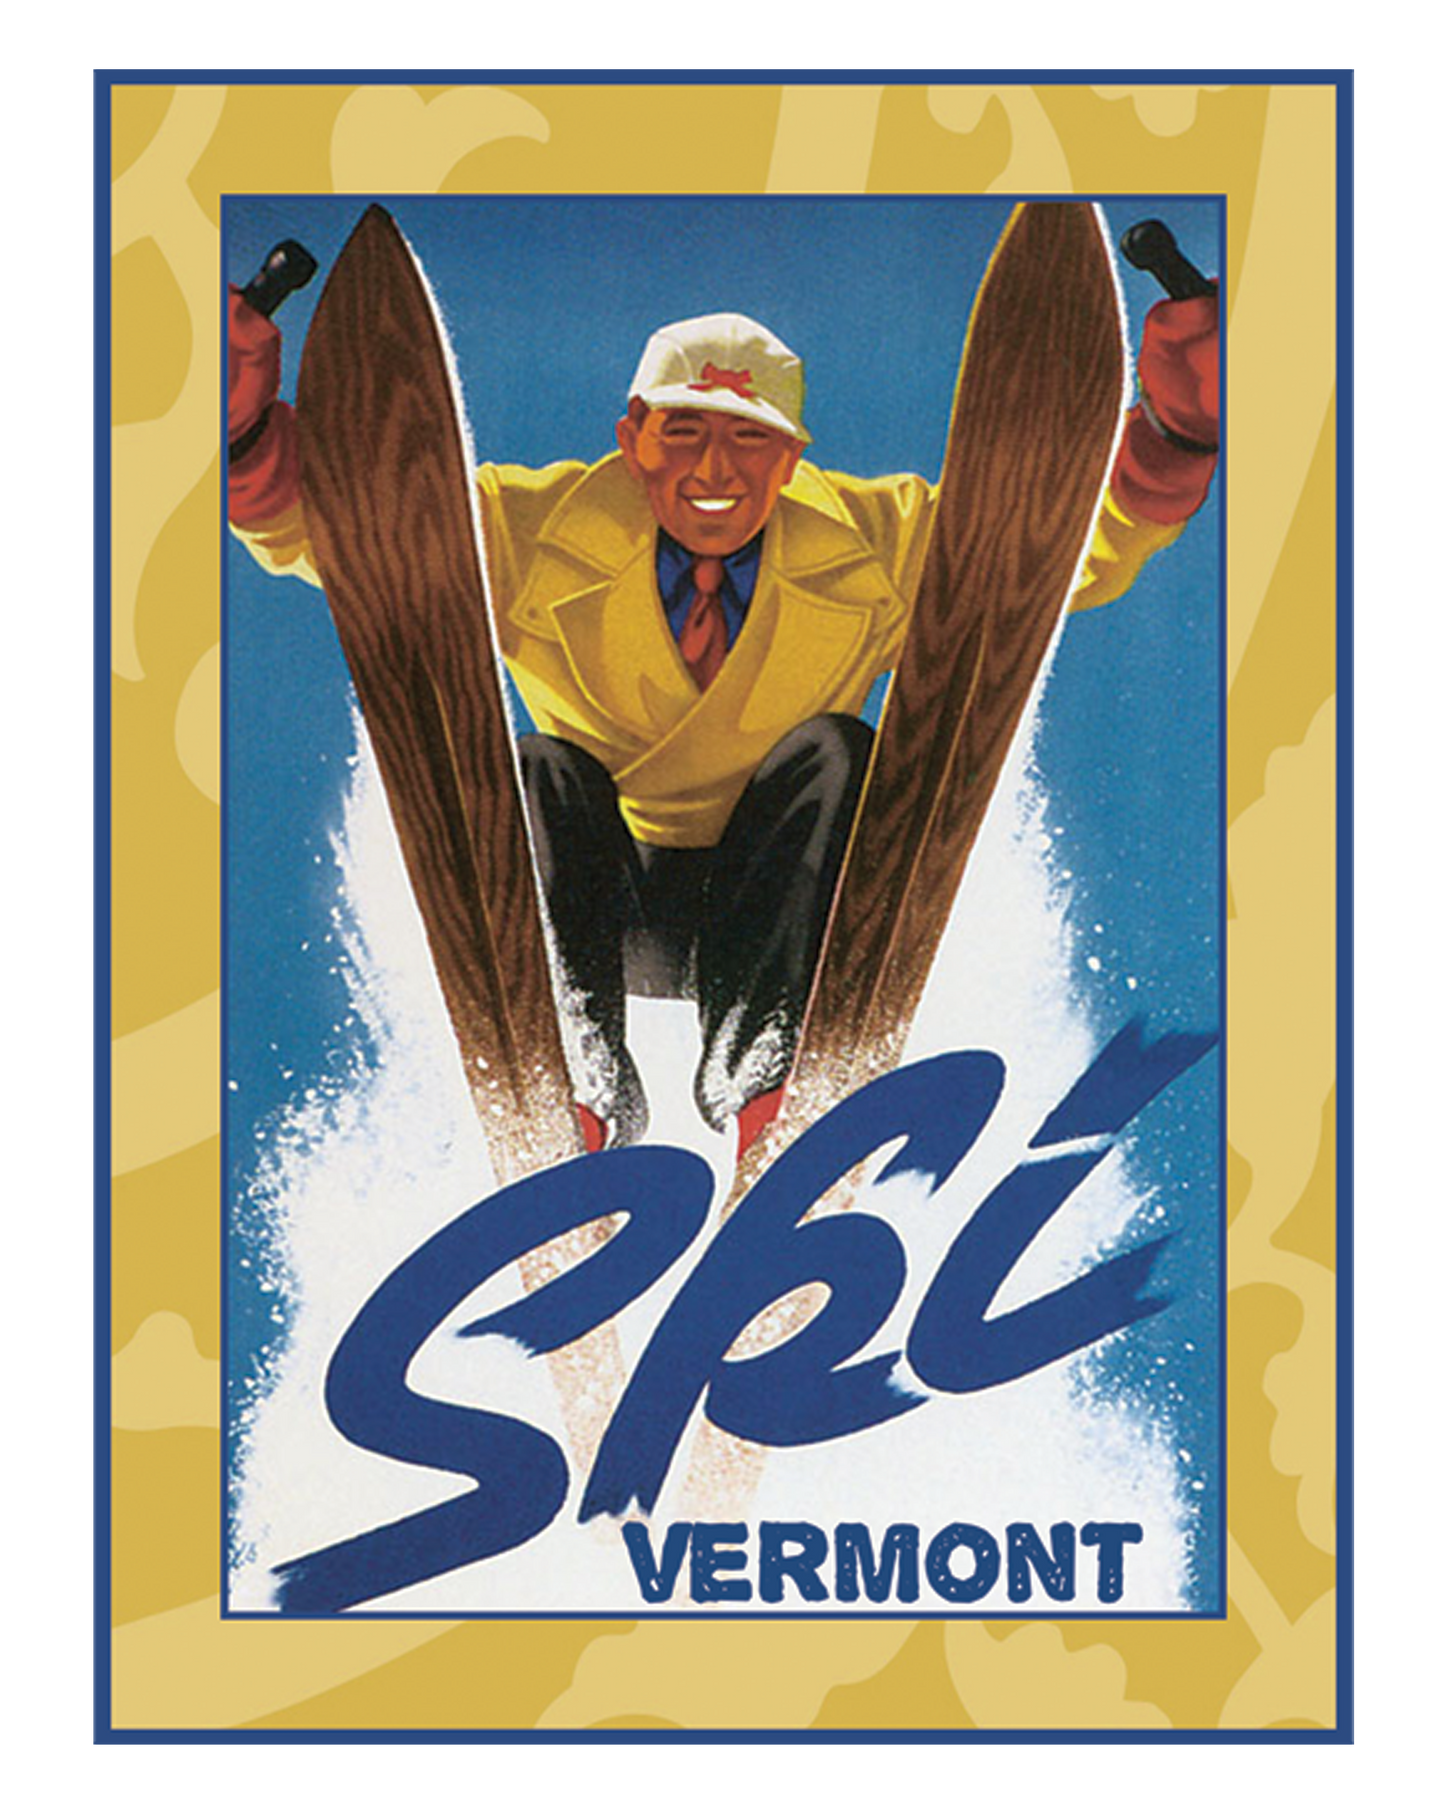 VT Ski Man